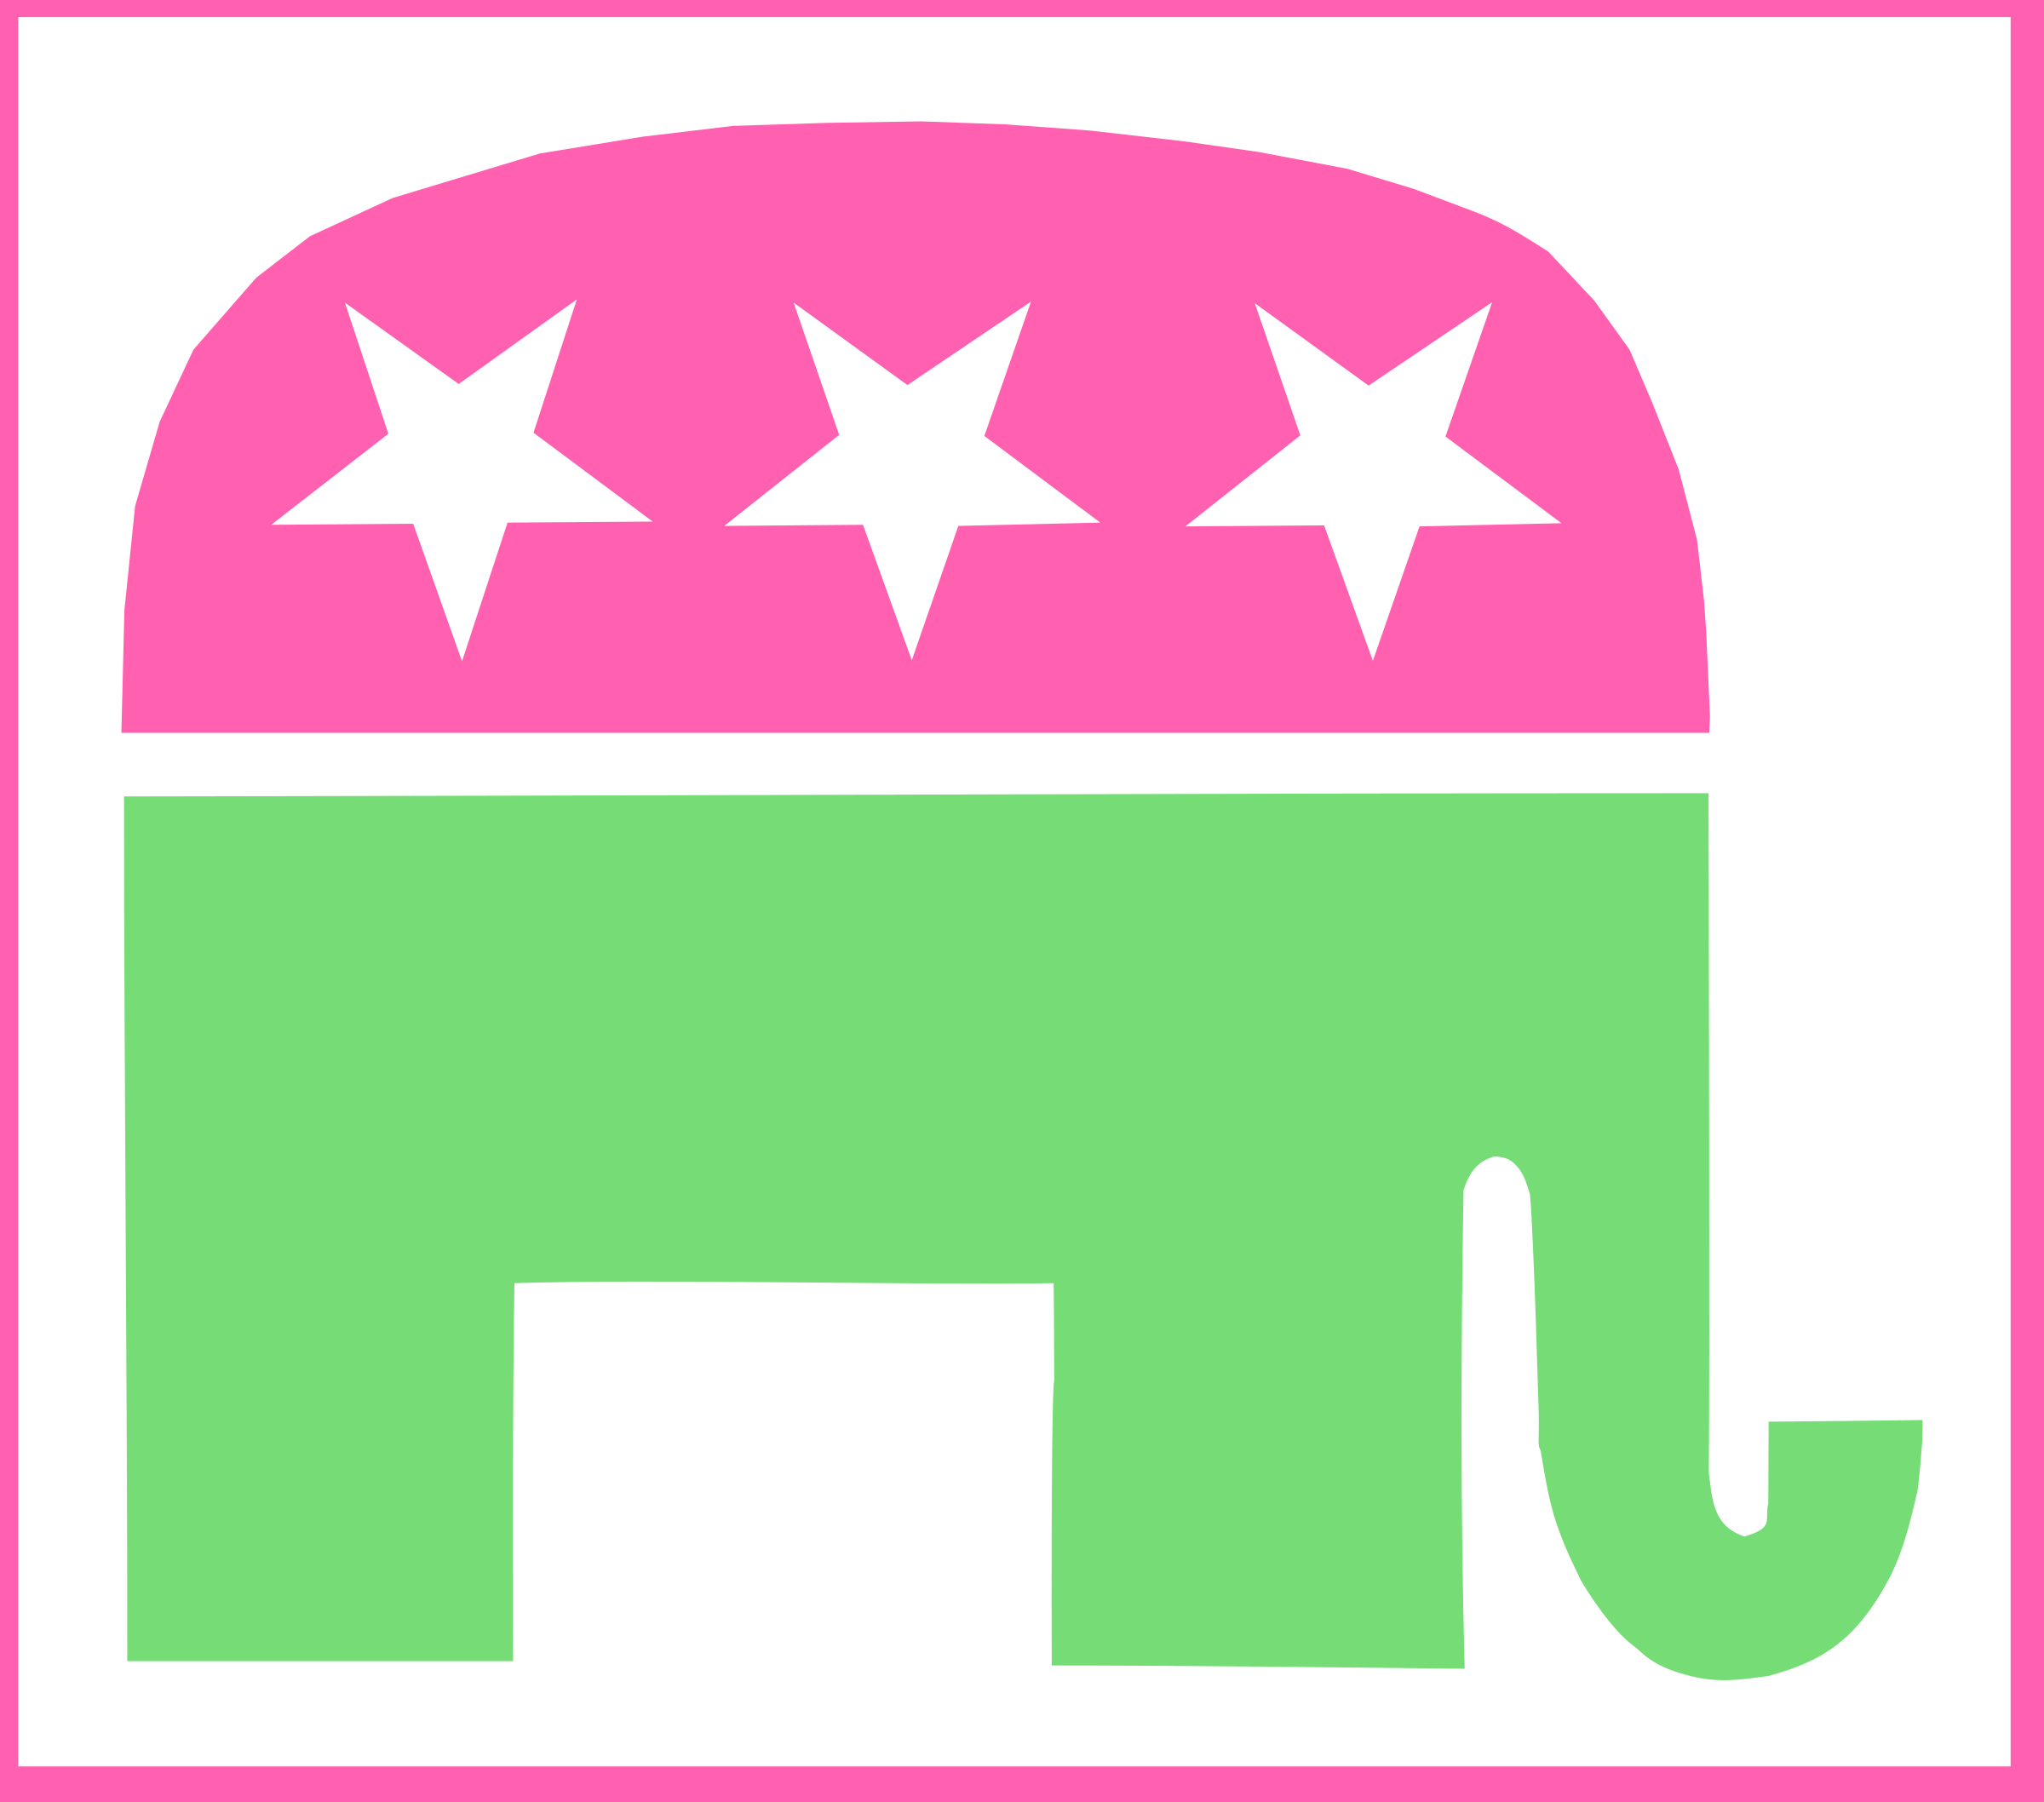 Clipart republican elephant background